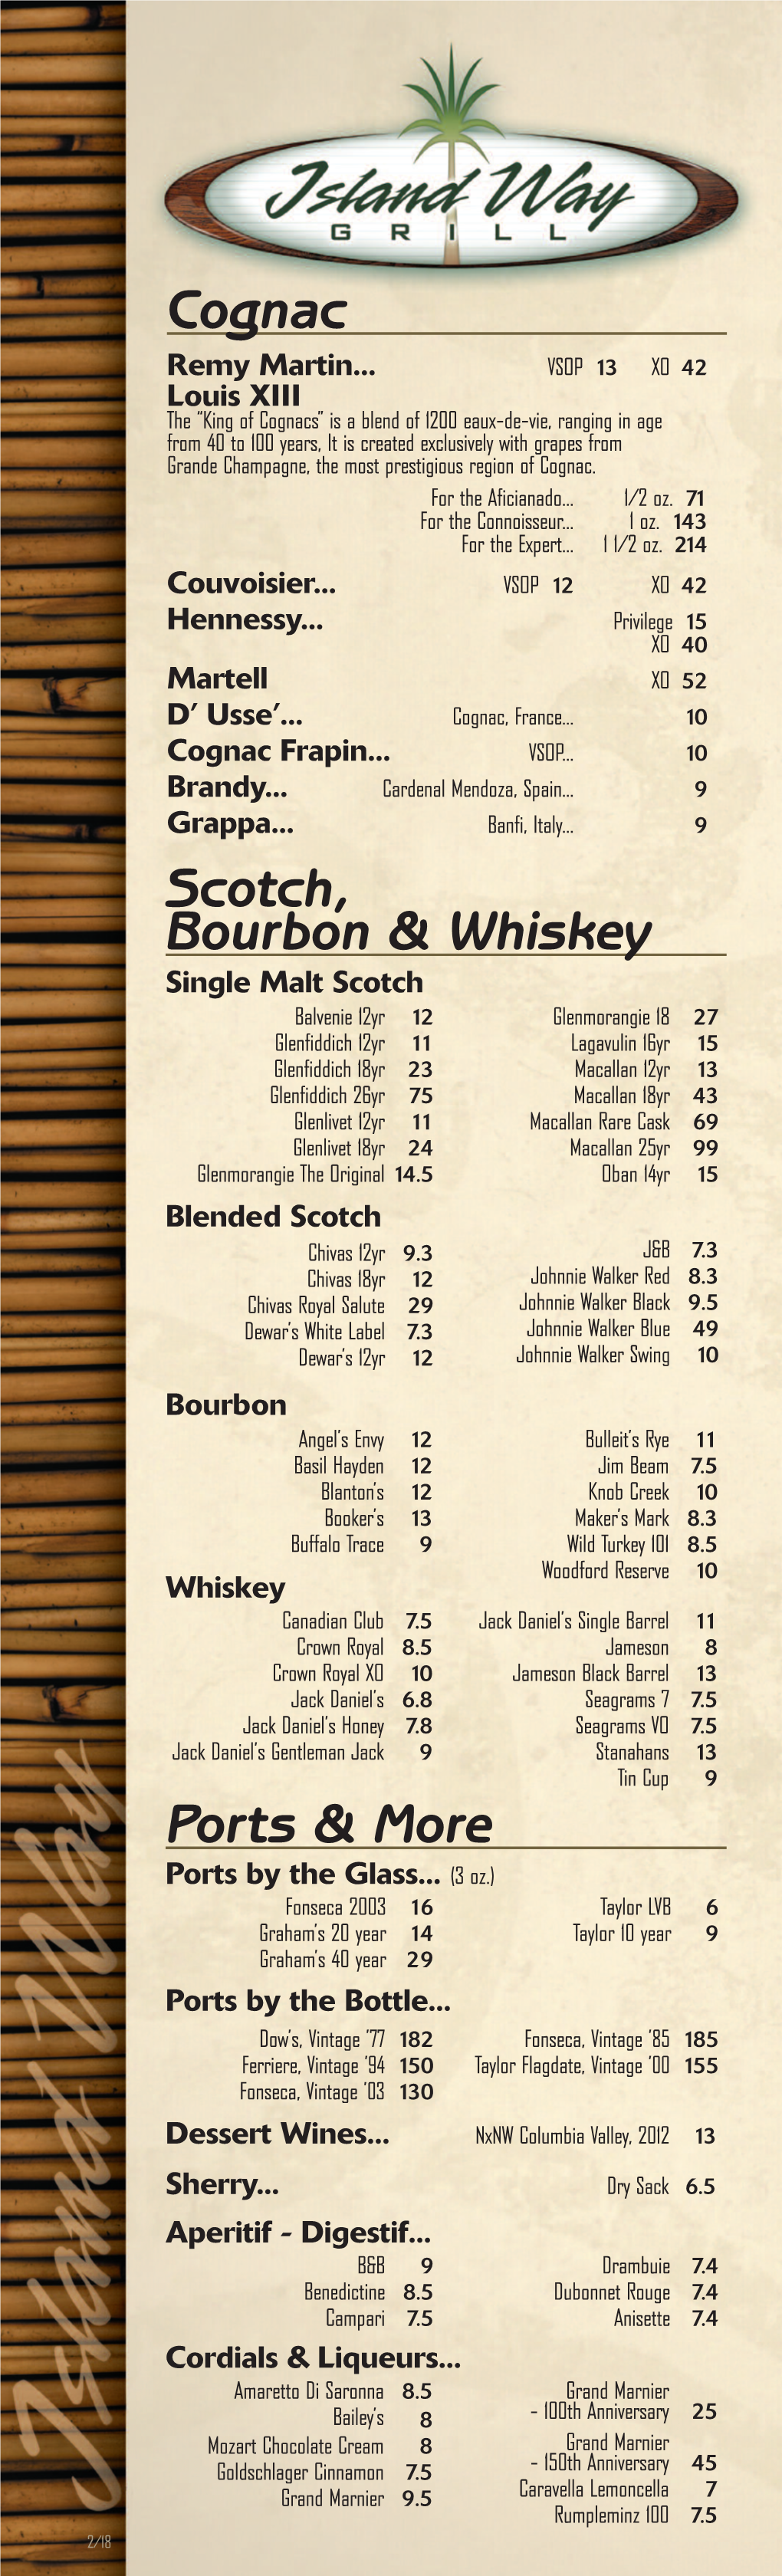 Cognac Ports & More Scotch, Bourbon & Whiskey